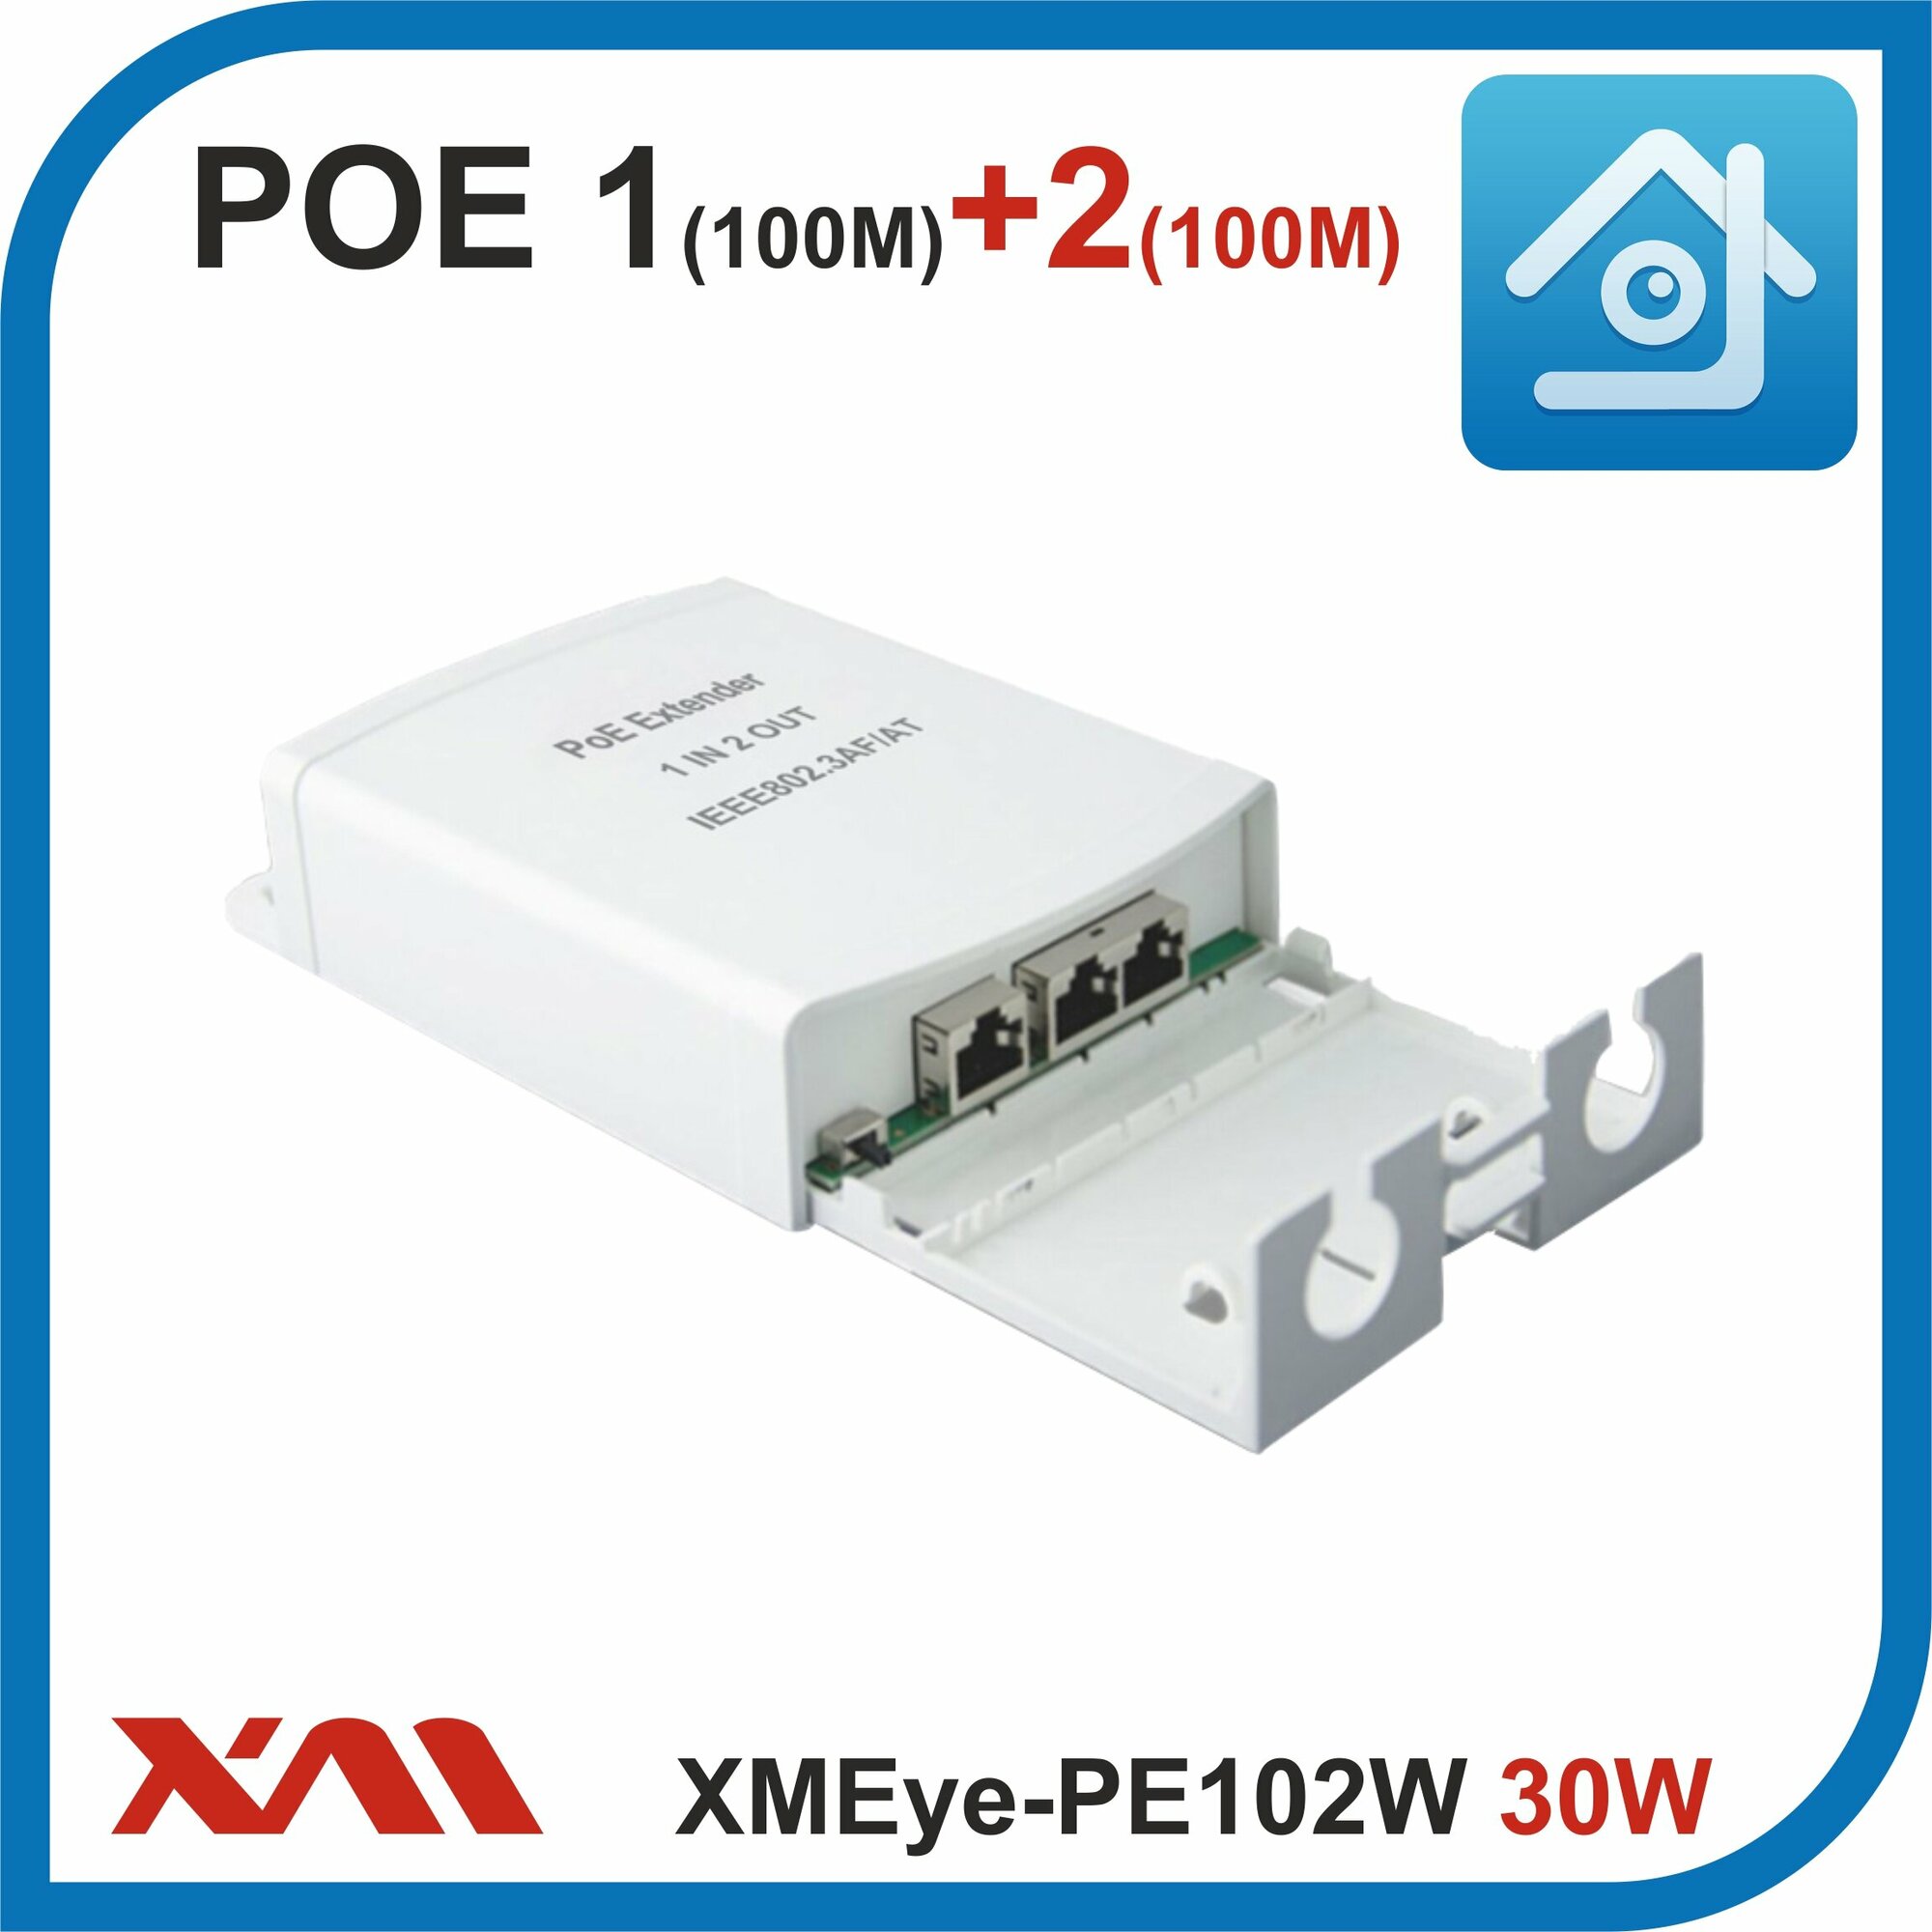 XMEye-PE102W 30W Extender (Экстендер) POE на 1+2 порта (10/100M) для уличной установки